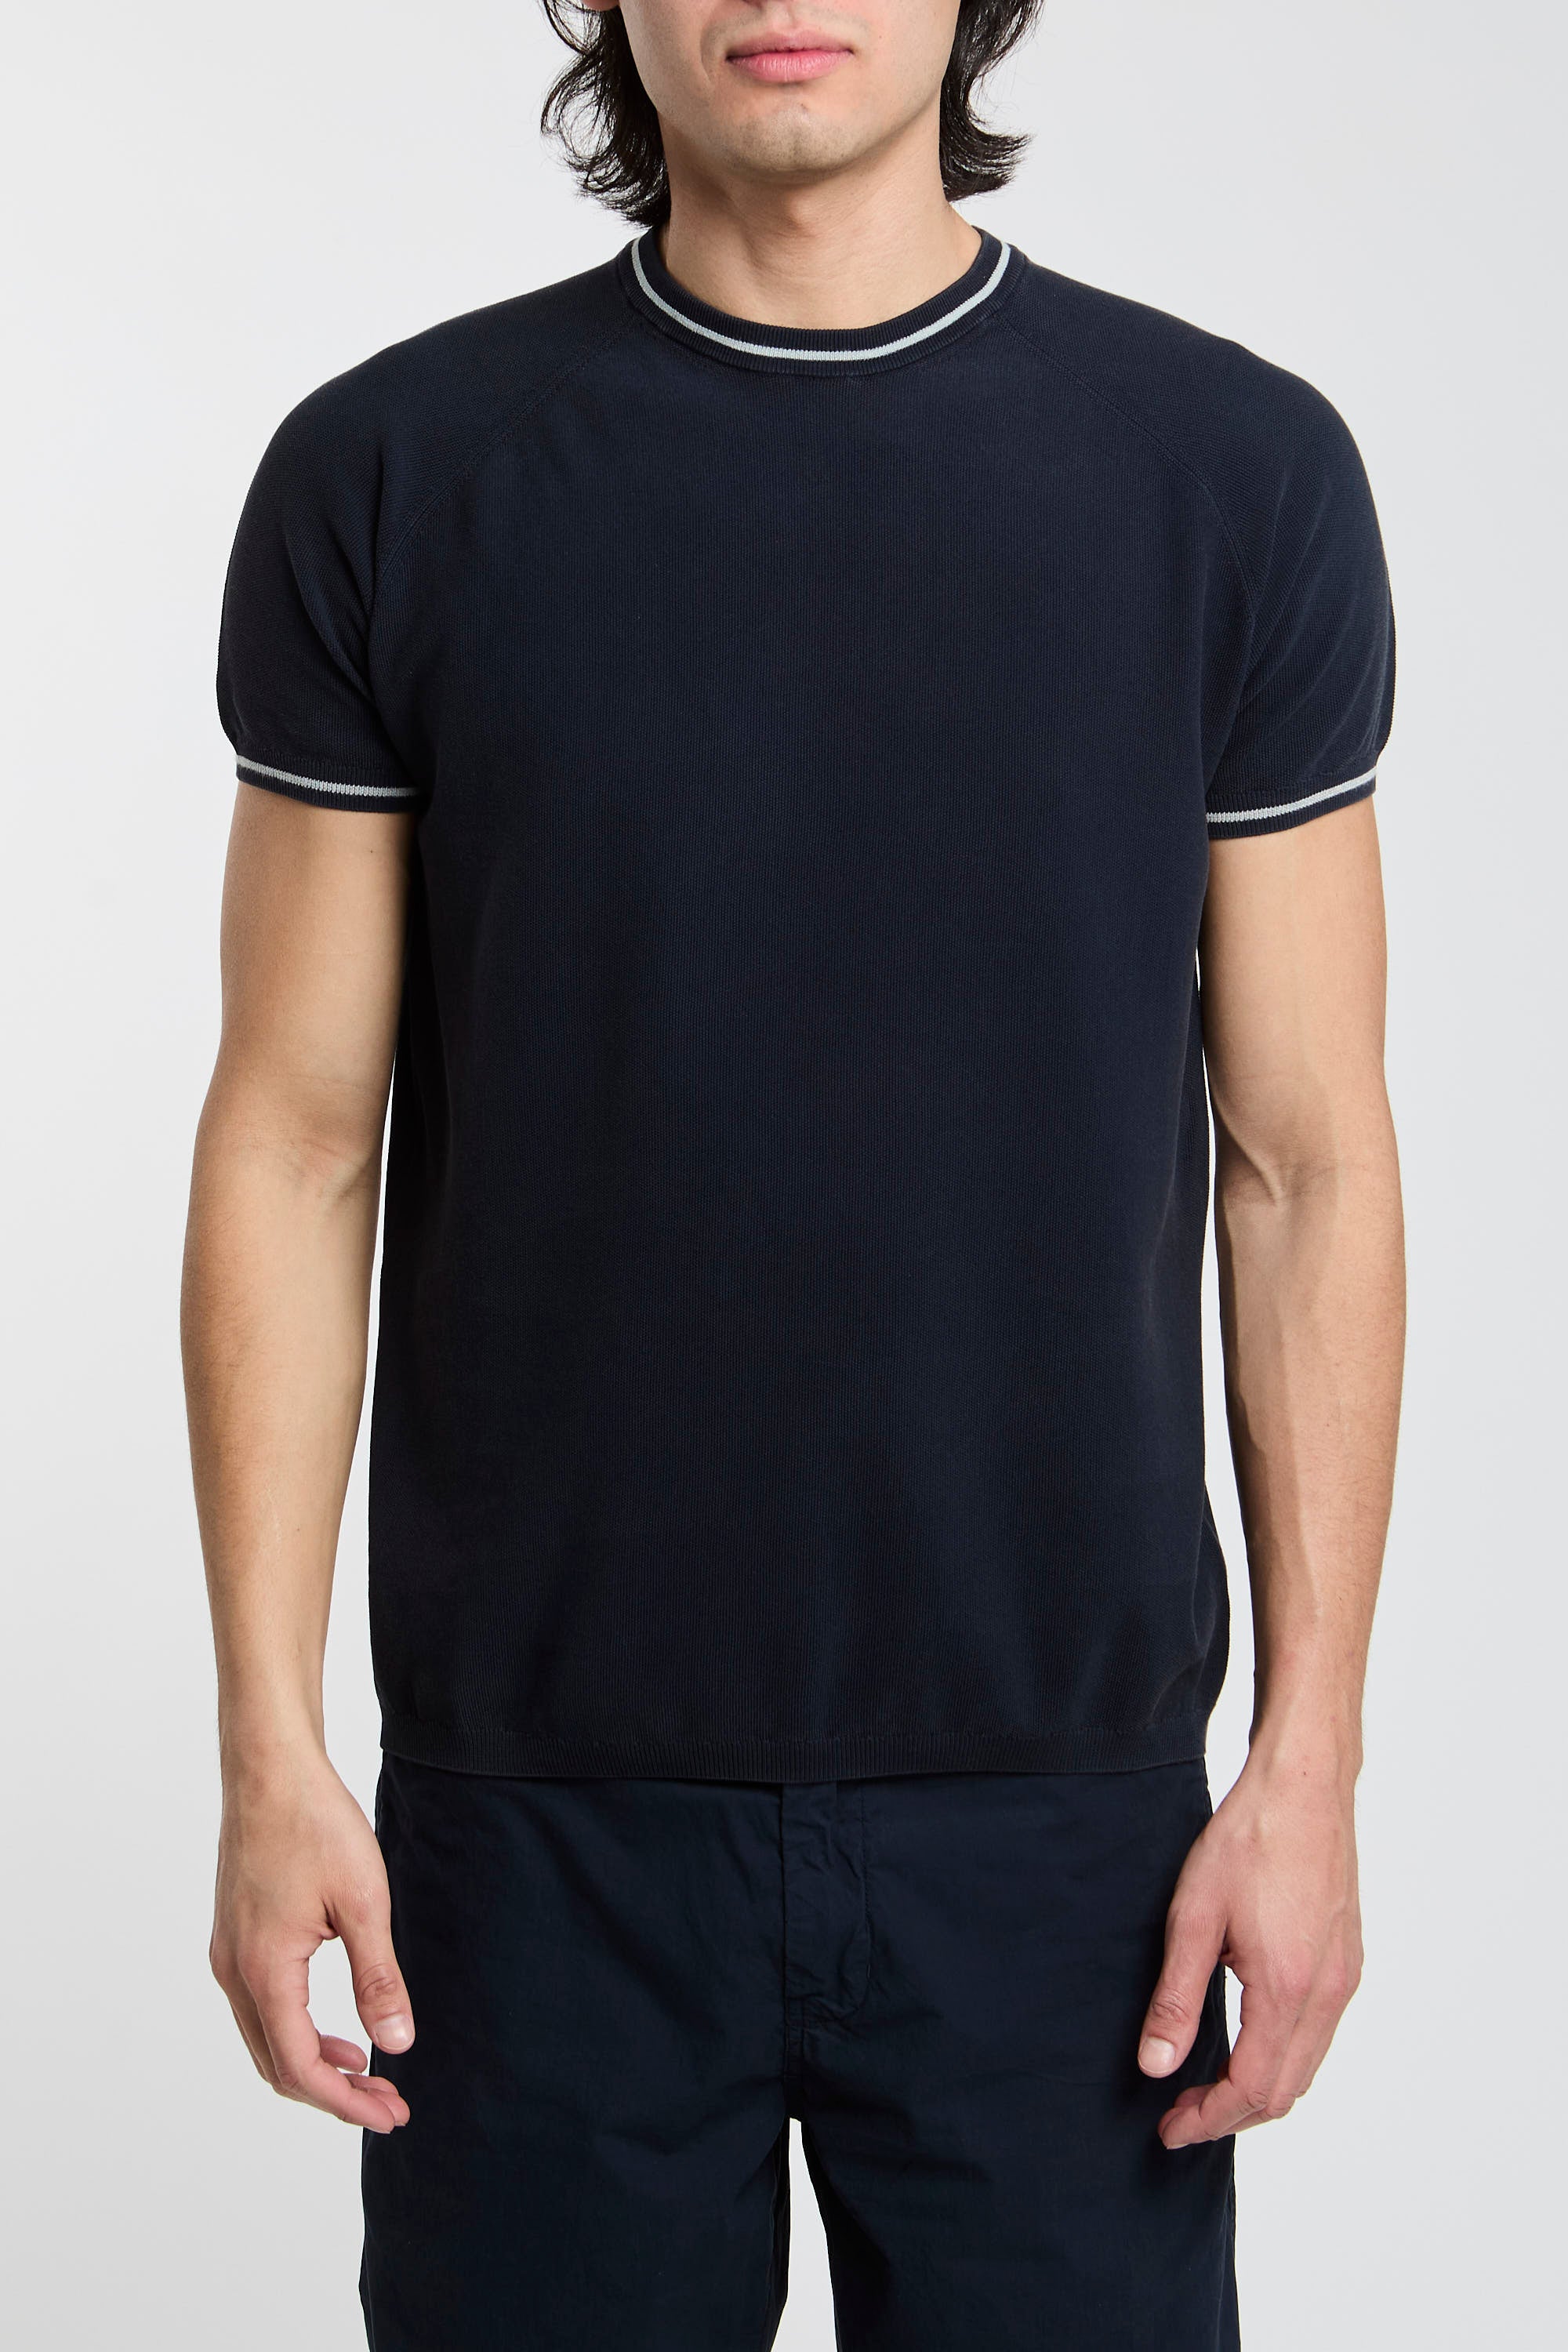 Aspesi Blue Cotton Knit T-Shirt-1